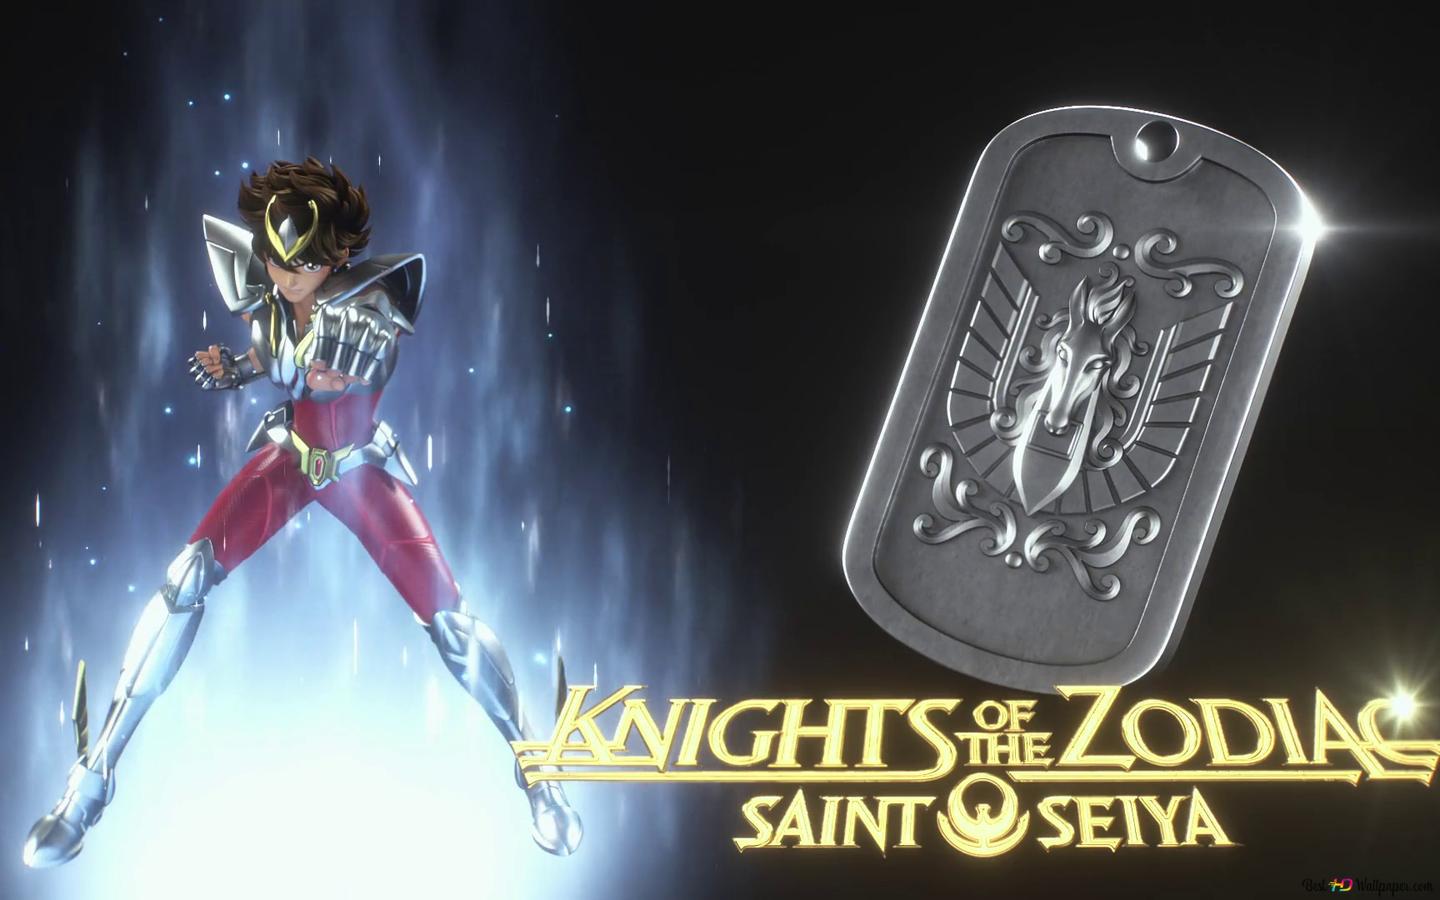 Knights Of The Zodiac, Saint Seiya HD wallpaper download